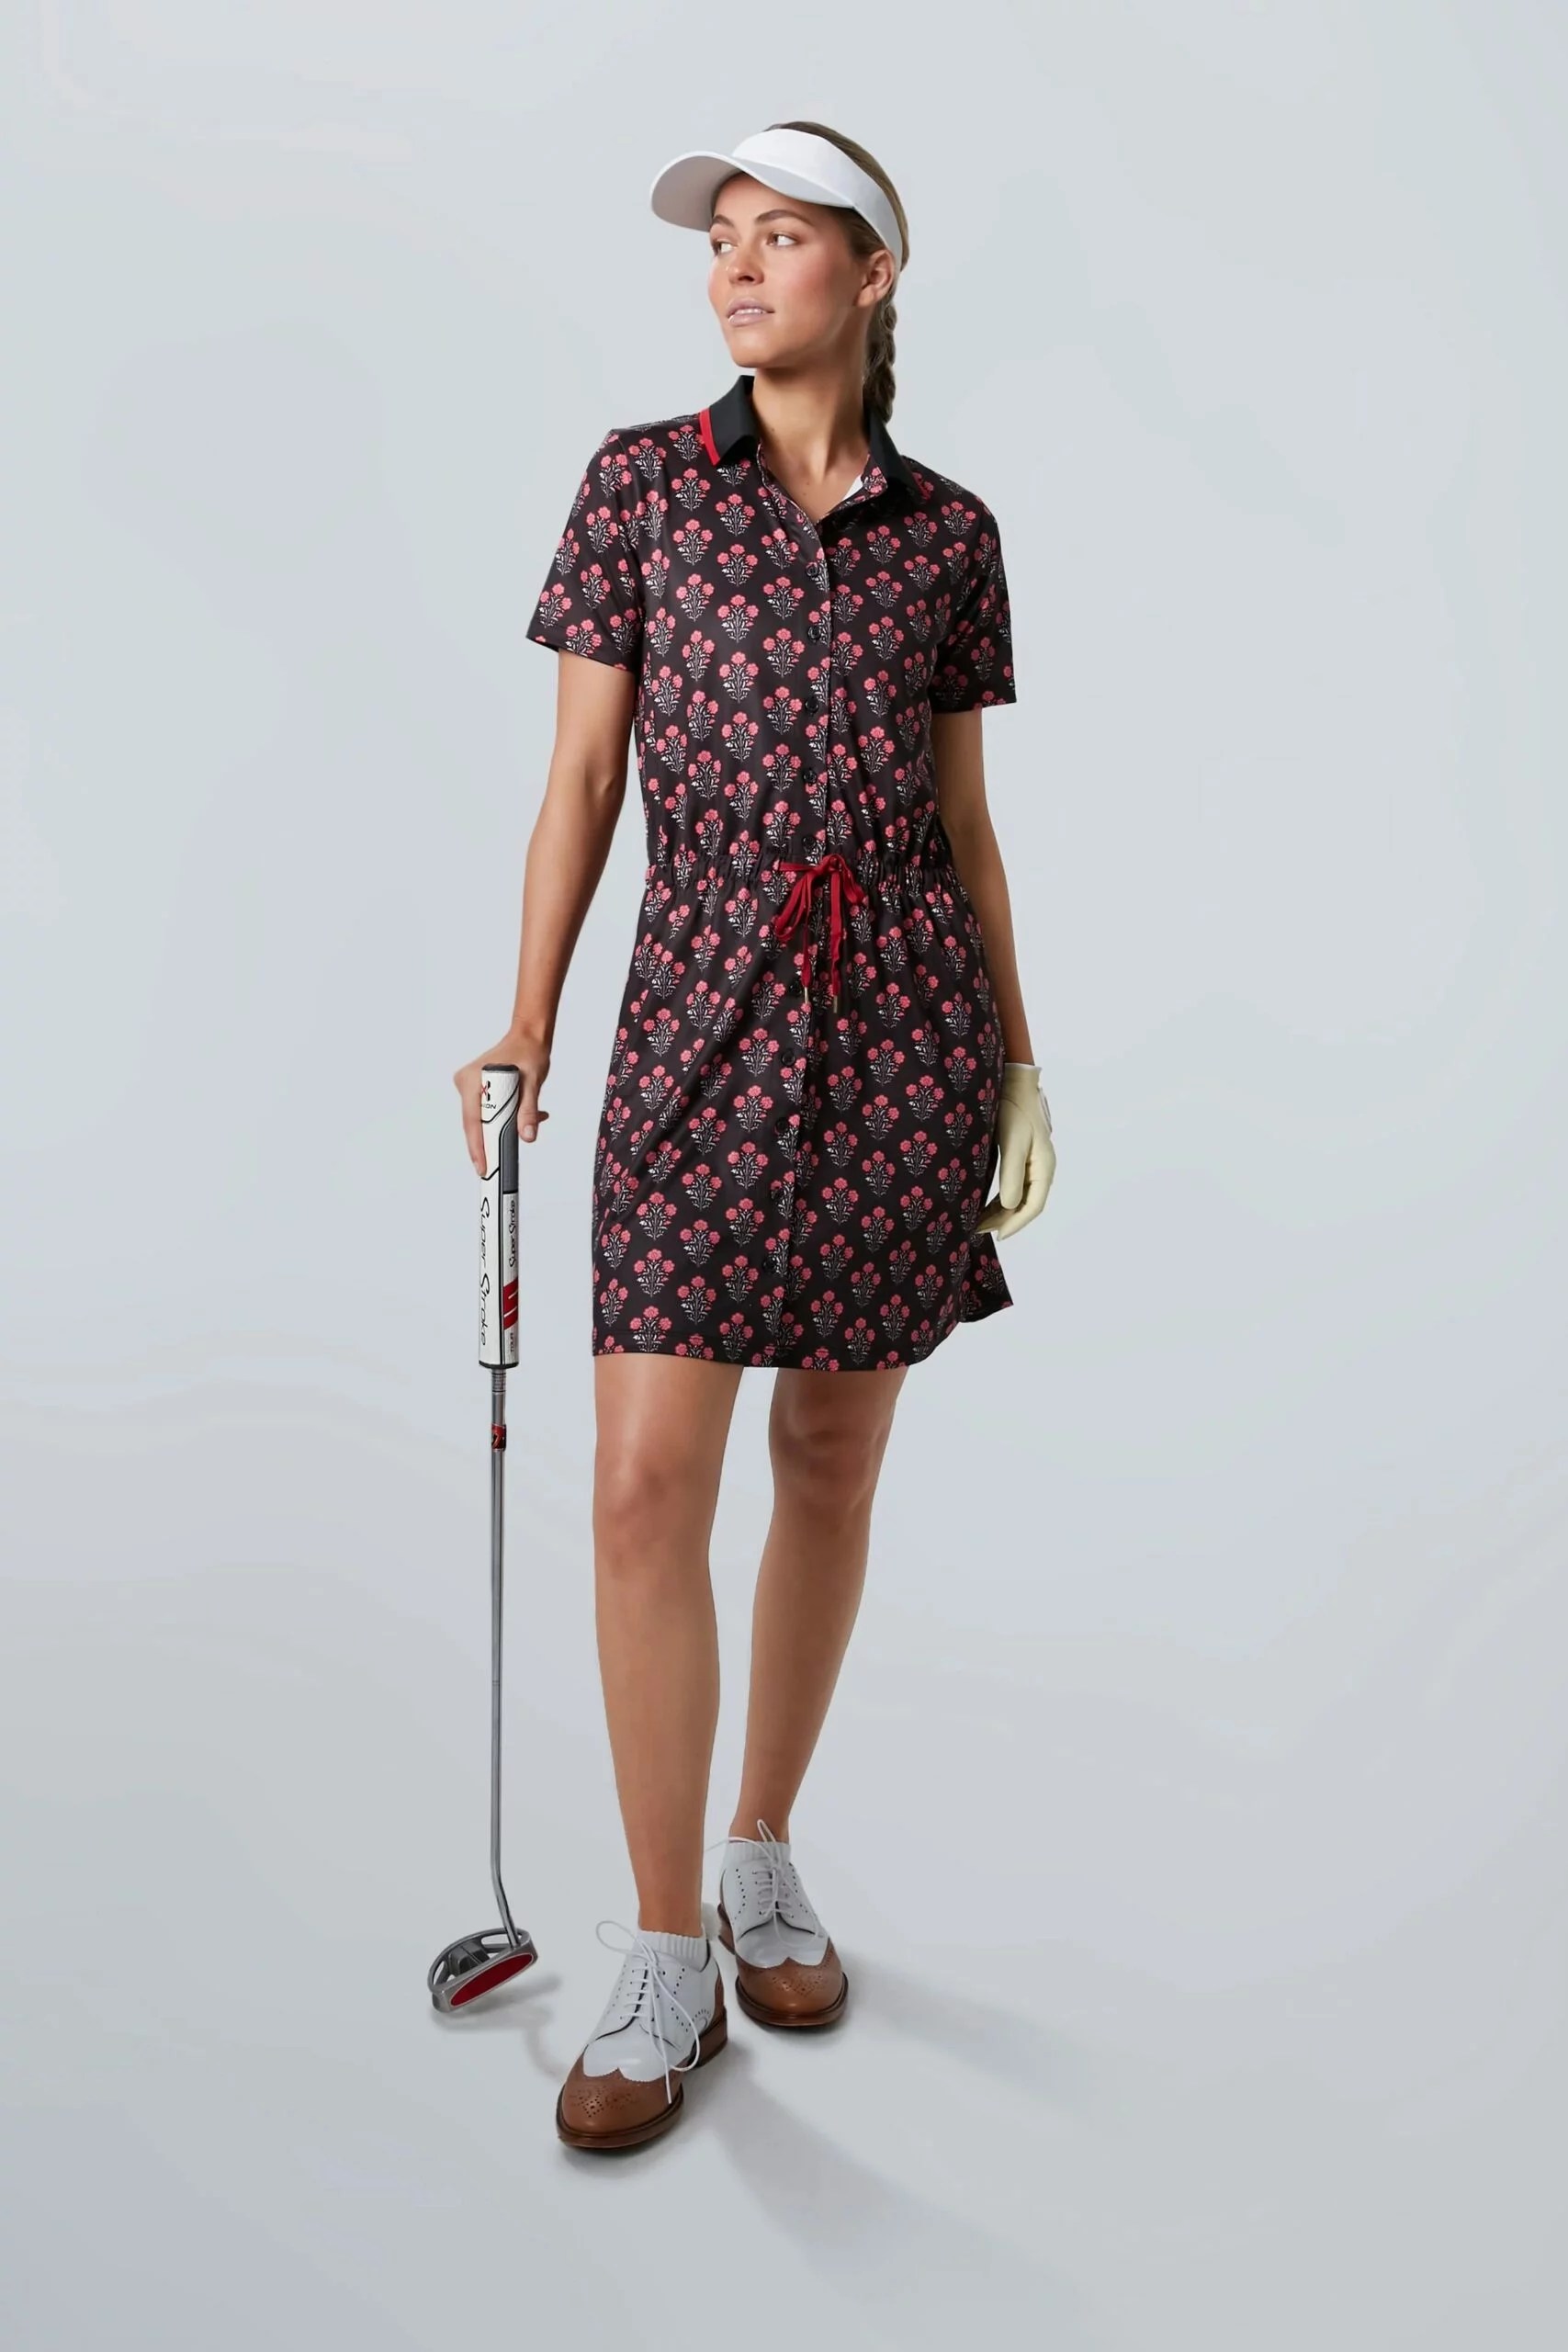 Tnuck Sport Black Dahlia Short Sleeve Polo Golf Dress